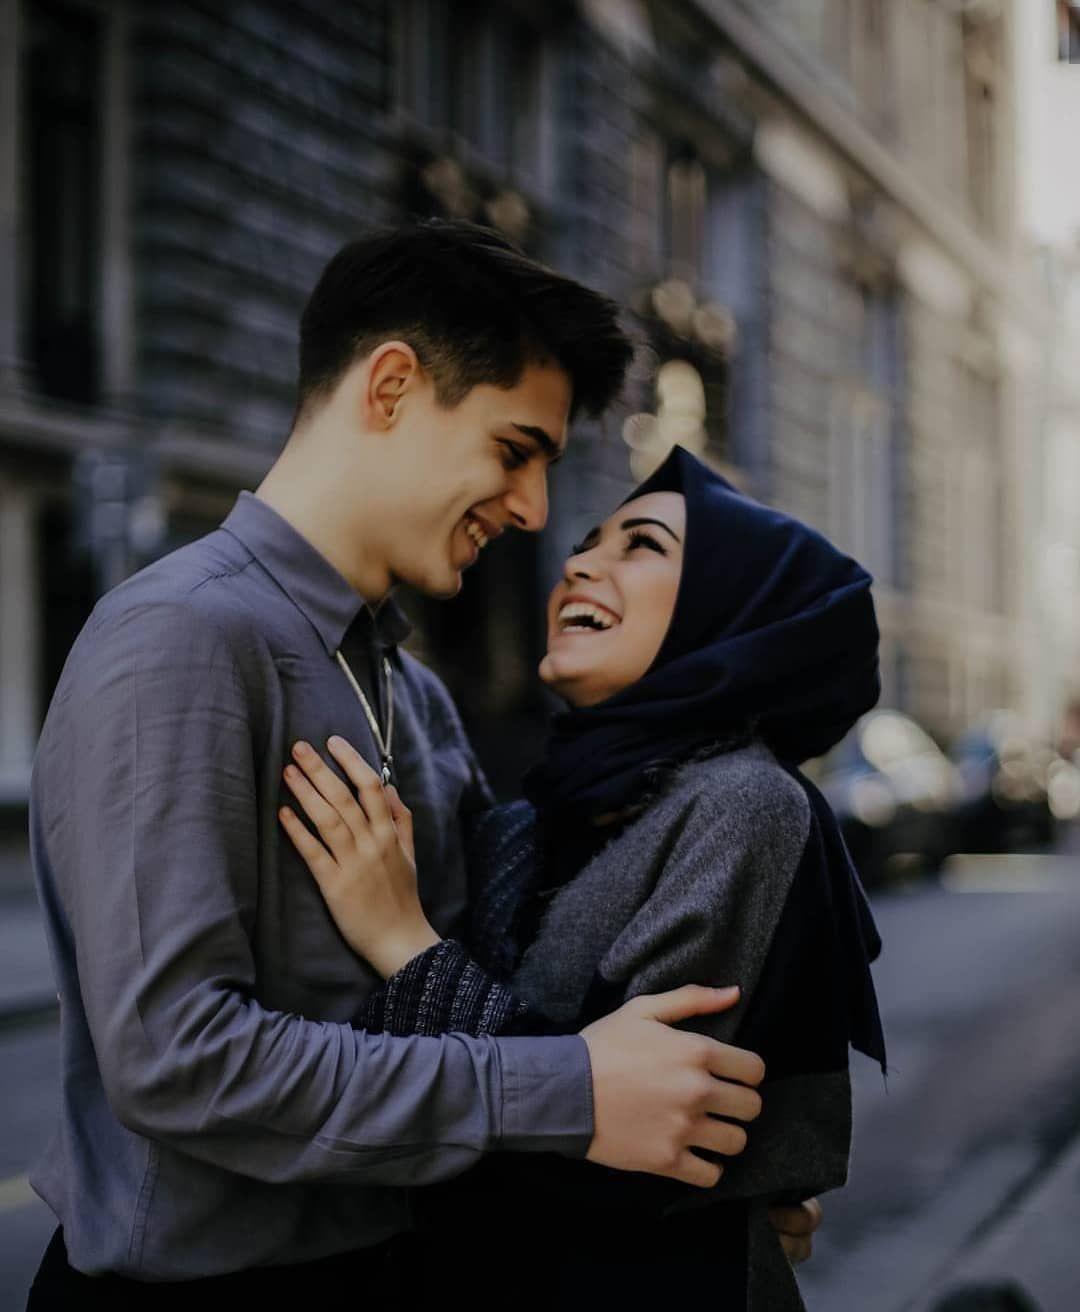 Muslim Couple Wallpaper Free .wallpaperaccess.com